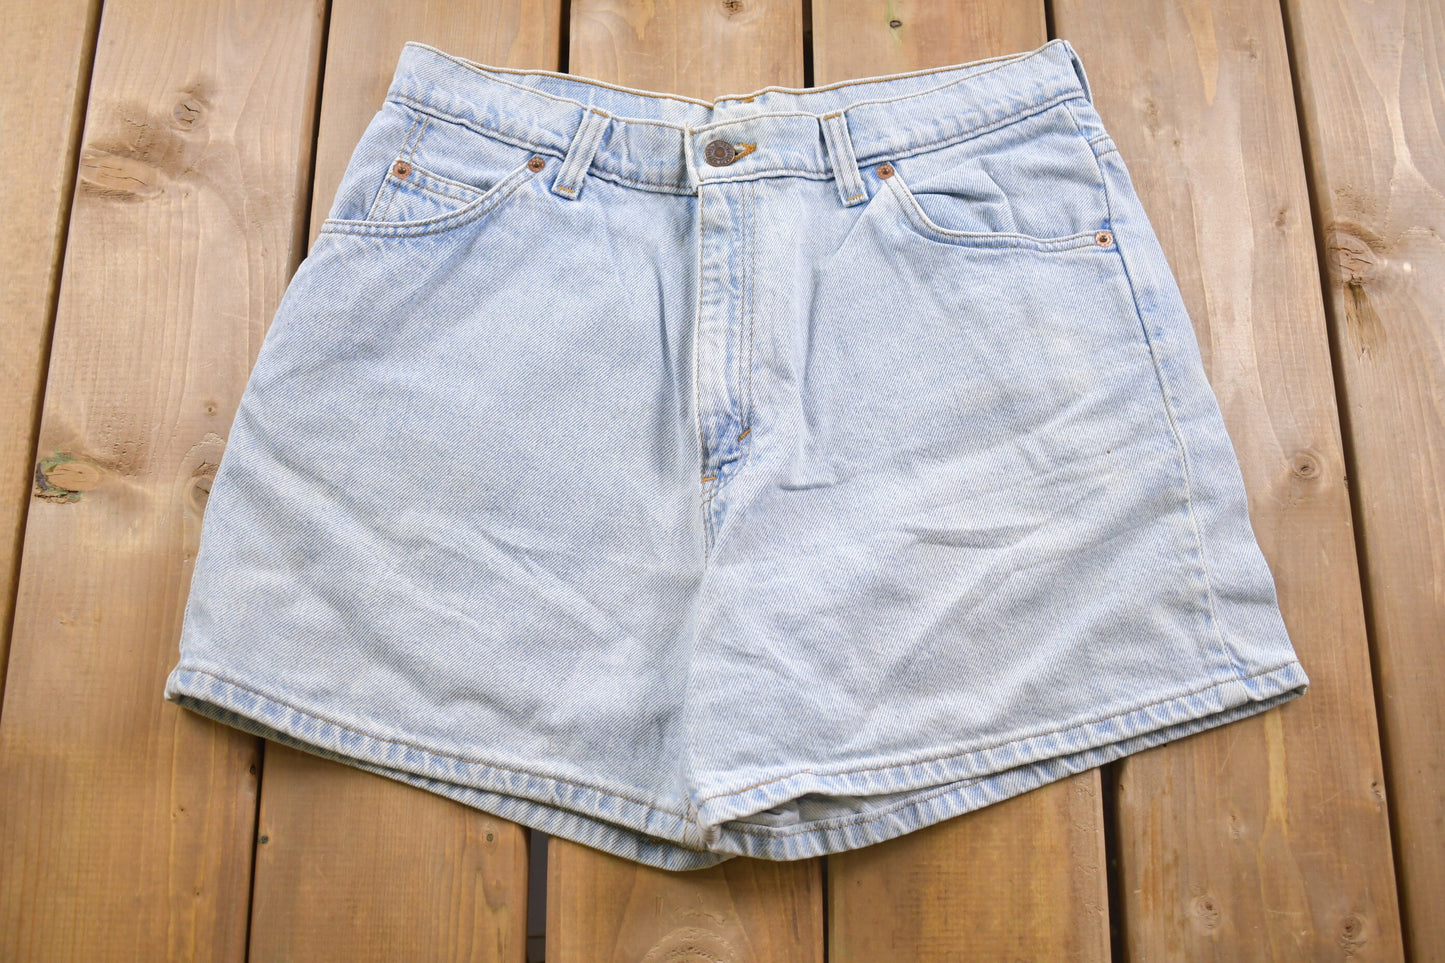 Vintage 1990s Levi Jean Short Shorts 30 x 4 / 90s Shorts / Streetwear Fashion / Bottoms / Light Wash / Vintage Jeans